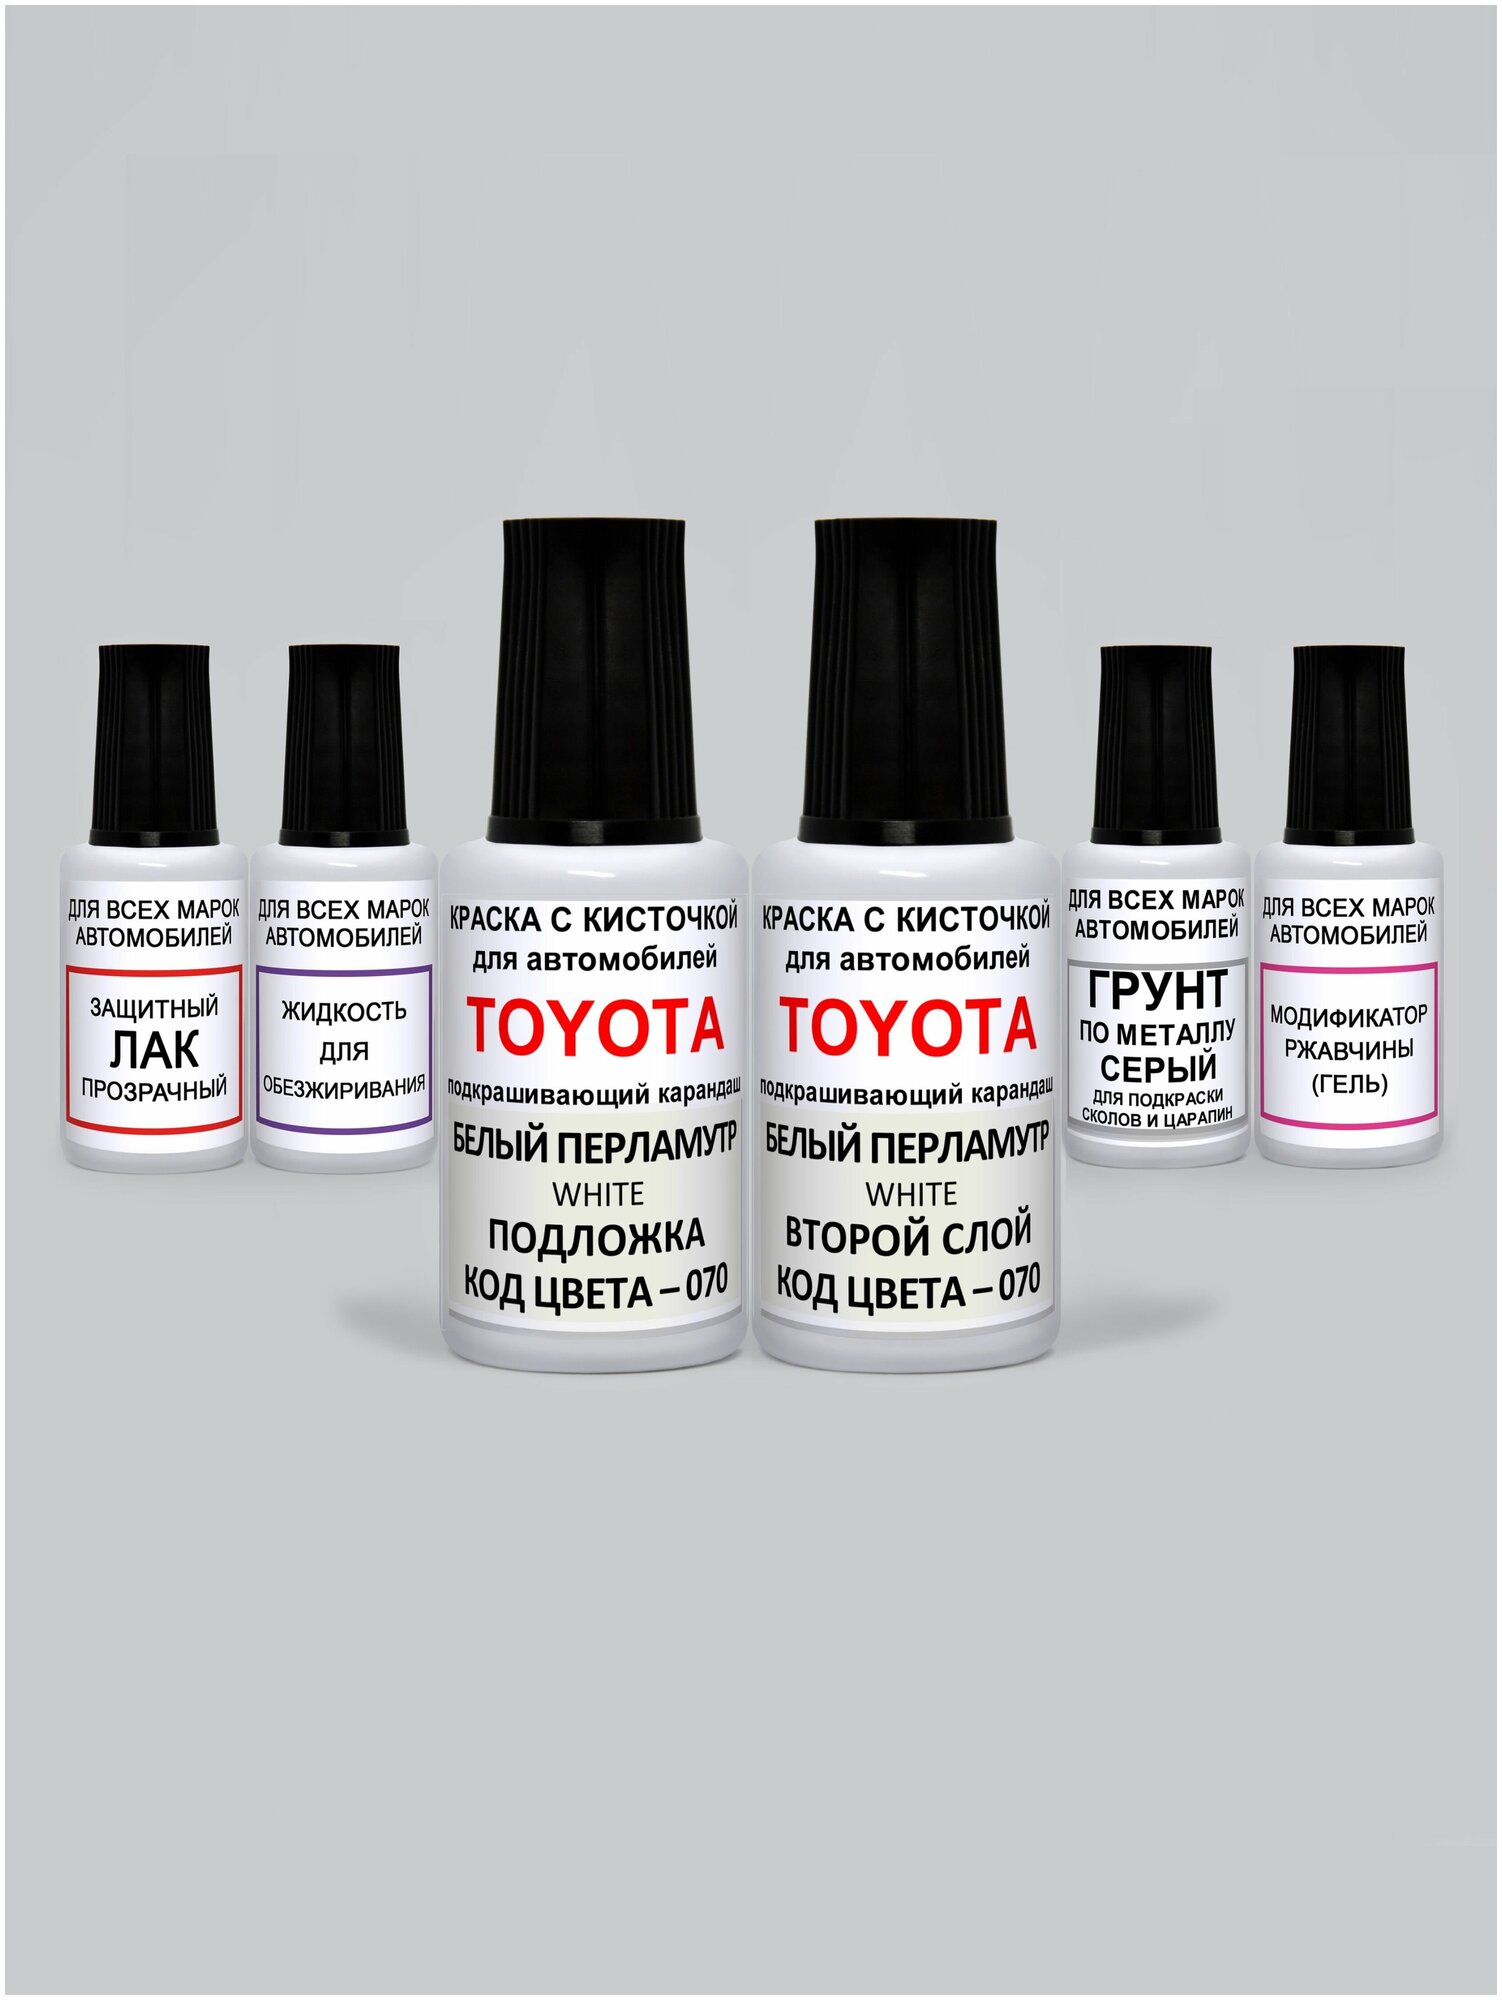 Краска для авто, набор для подкраски 070 для Toyota Белый перламутр, White, 6 предметов